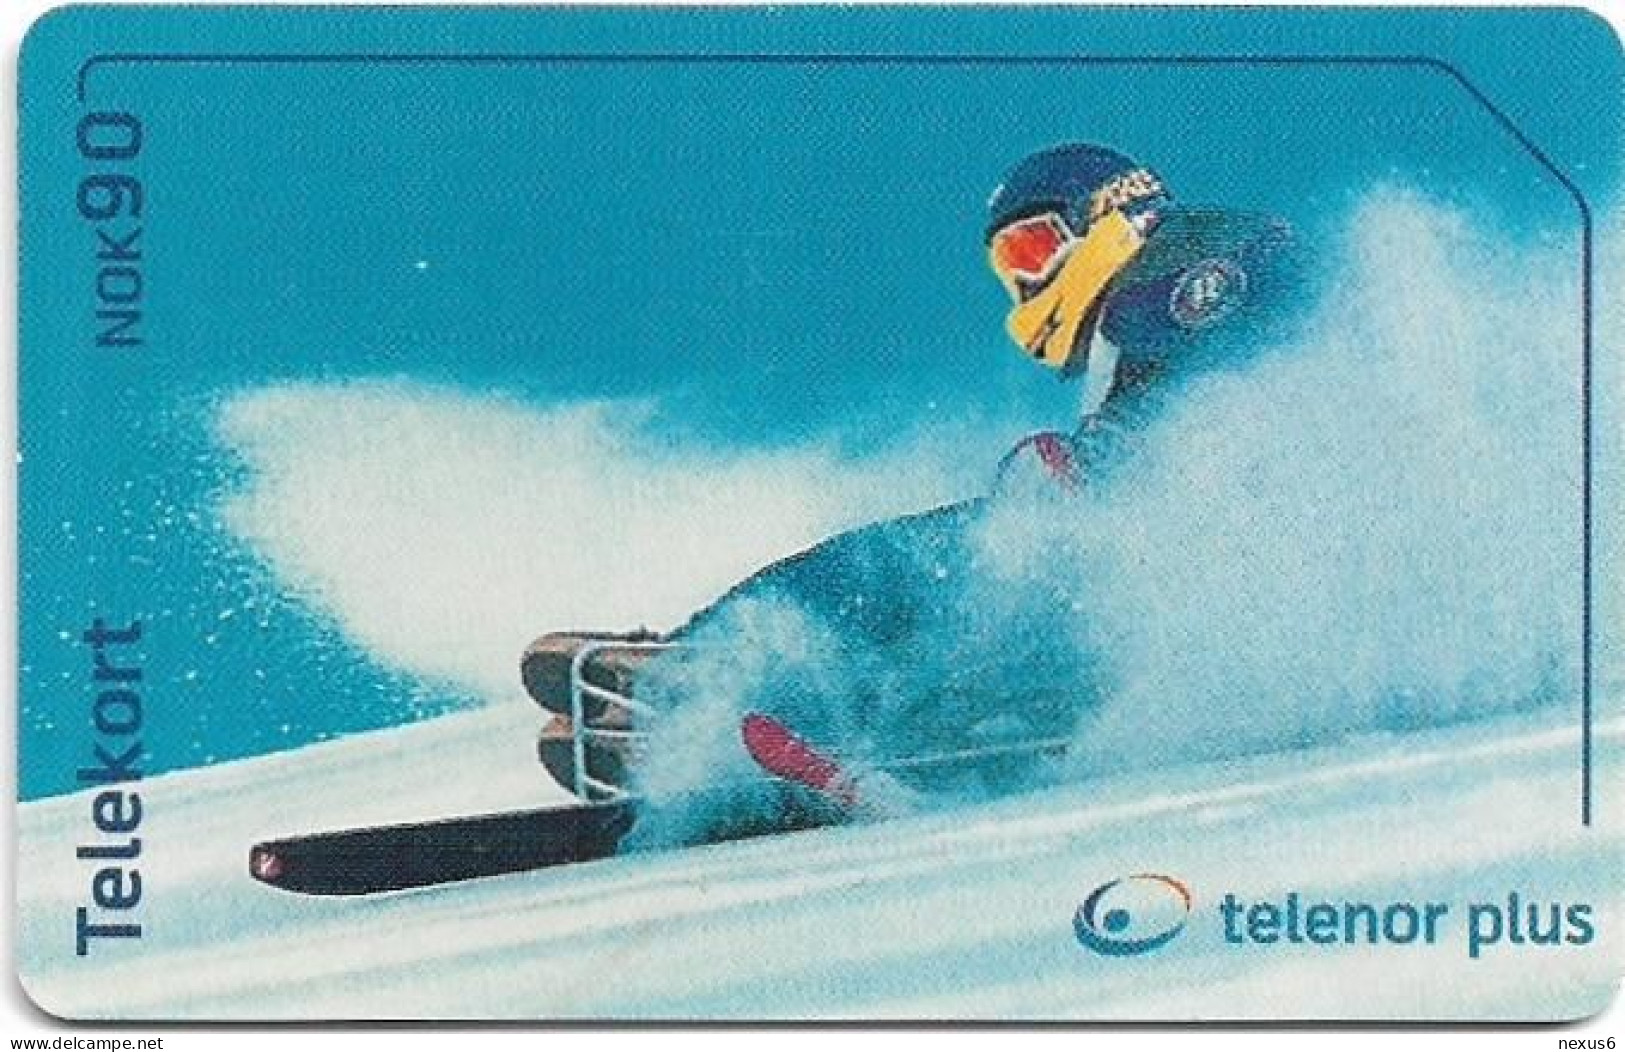 Norway - Telenor - Alpint Snow Ski - N-238 (Cn. 23030 001D6), SC7, 03.2002, 20.000ex, Used - Norvège